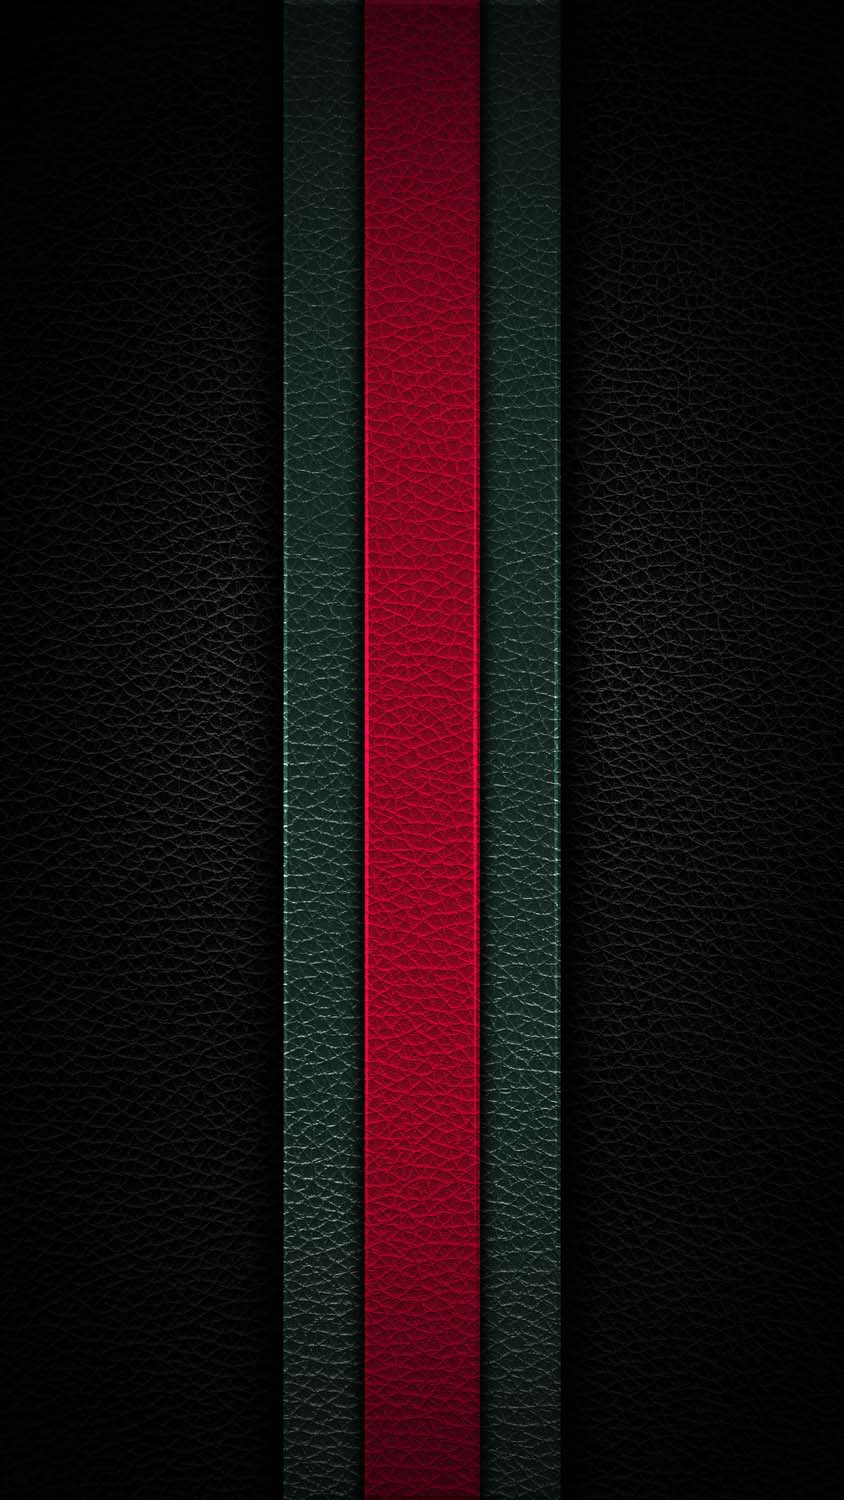 Luxury Leather Design iPhone Wallpaper HD